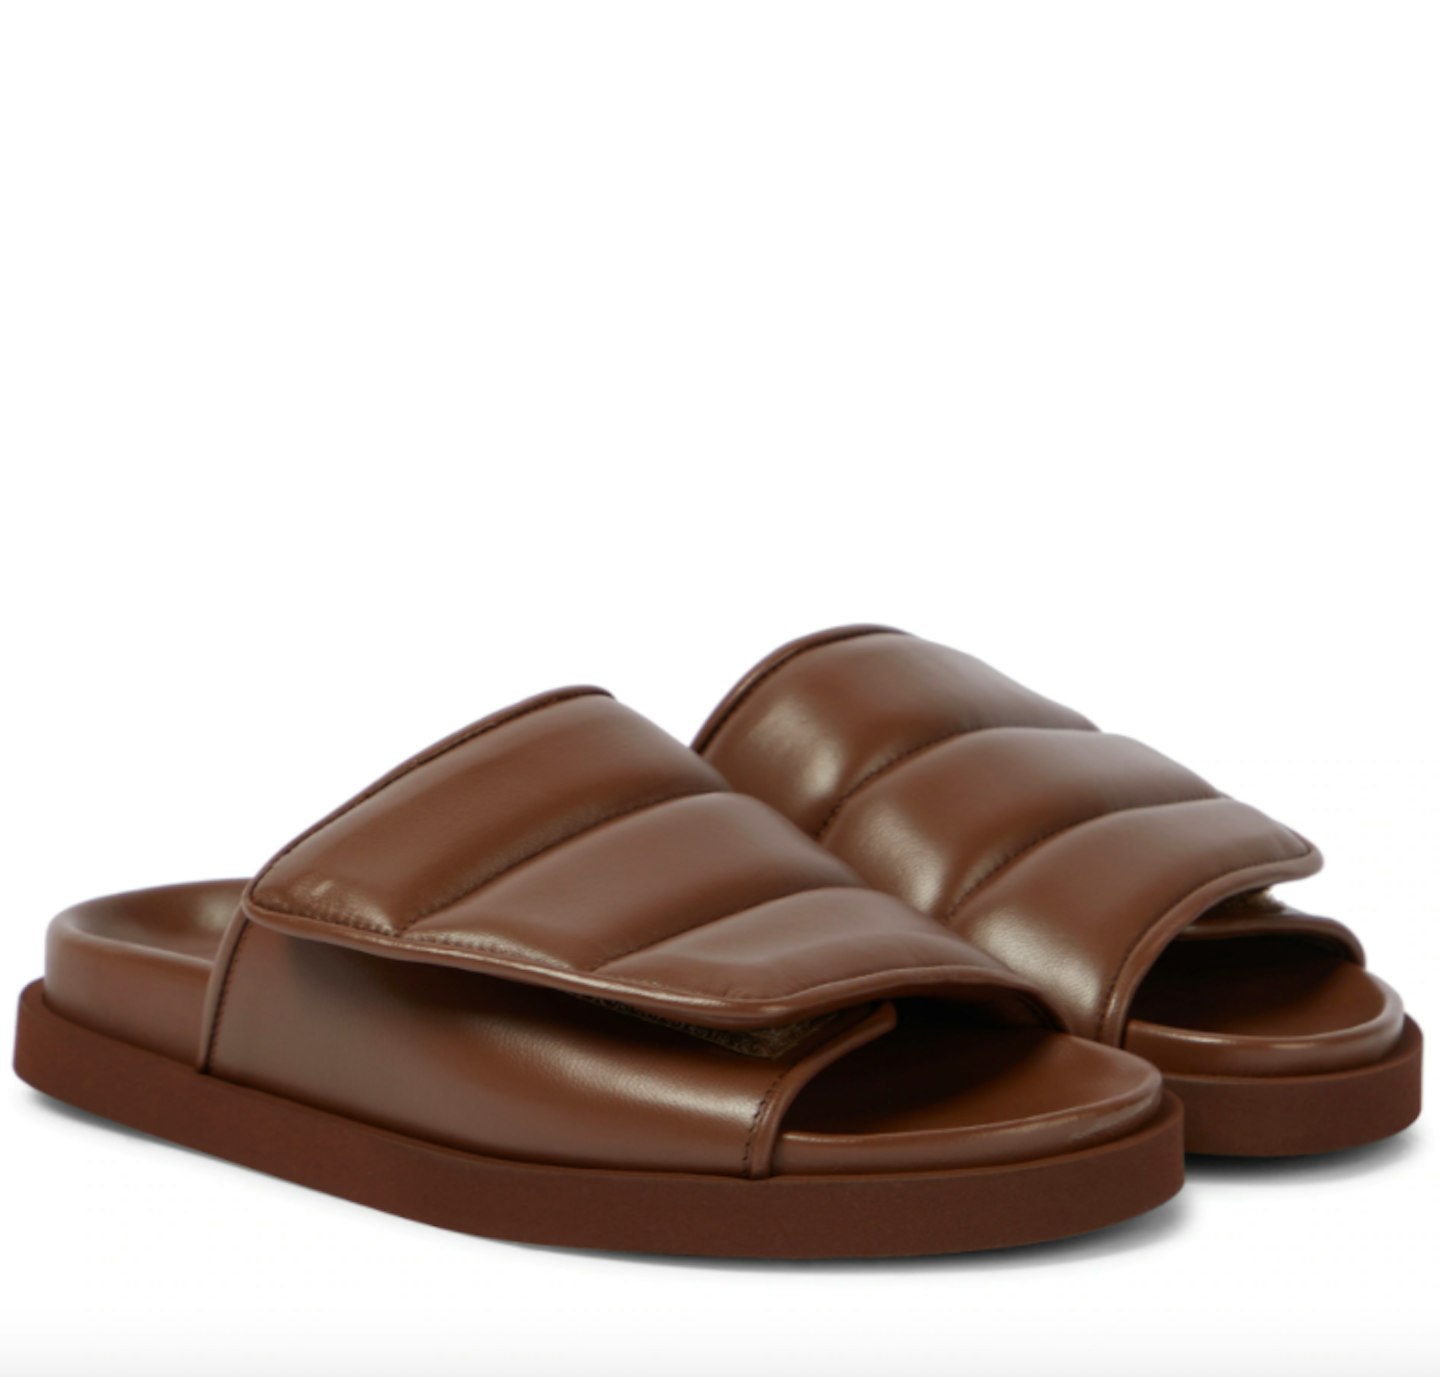 Gia Borghini, Gia 3 Padded Leather Slides, £305